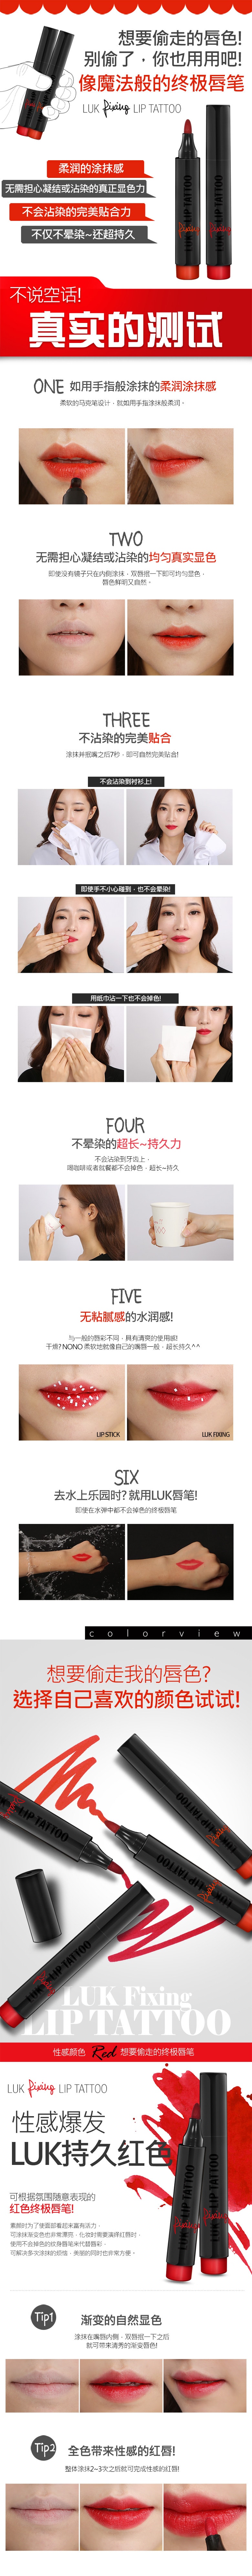 韩国 LUK Fixing Lip Tattoo 纹唇笔 #红色